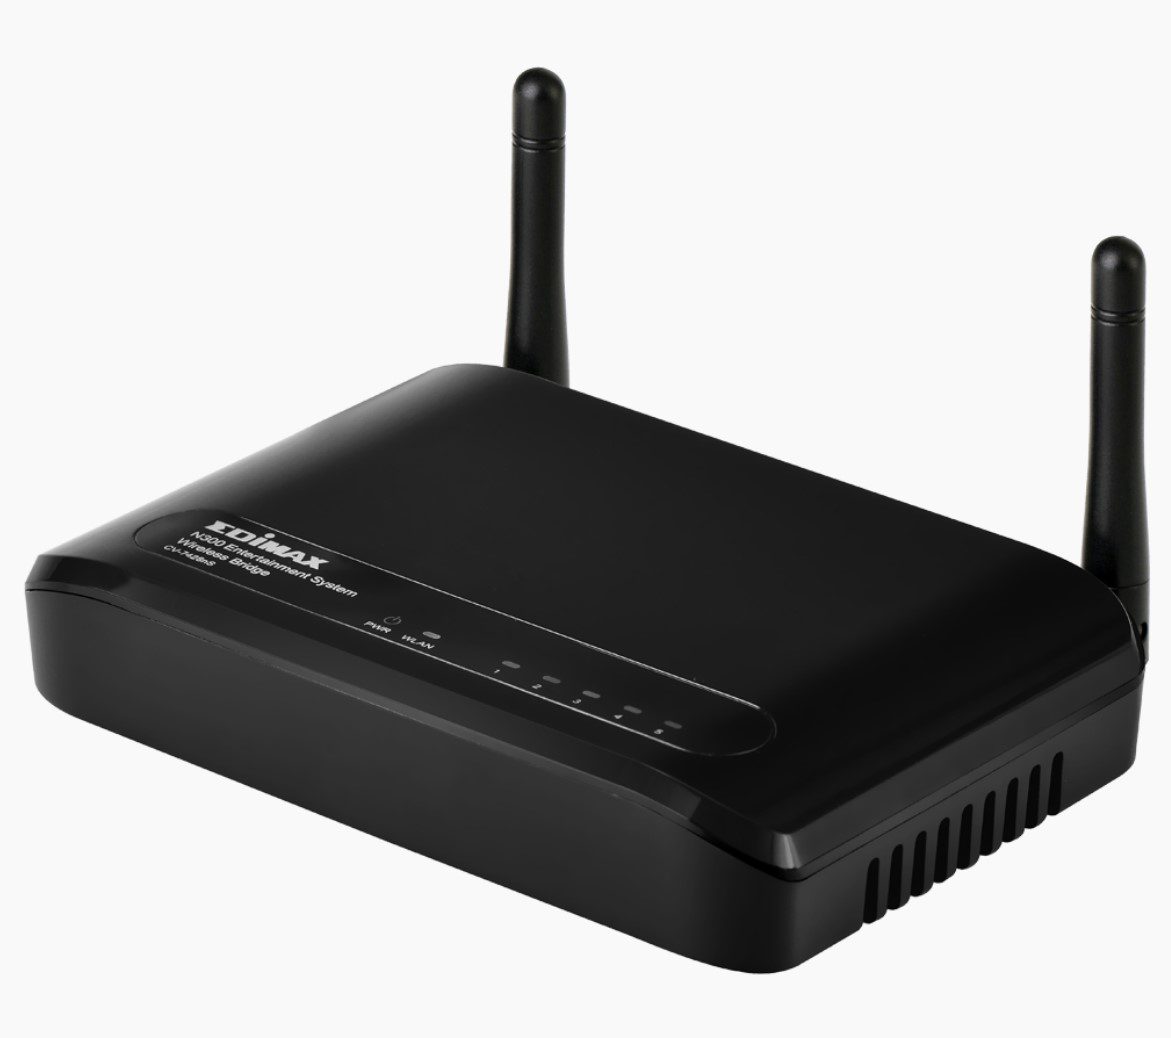 N300 Universal Wi-Fi Bridge for Smart TV, Blu-ray and Gaming CV-7428nS